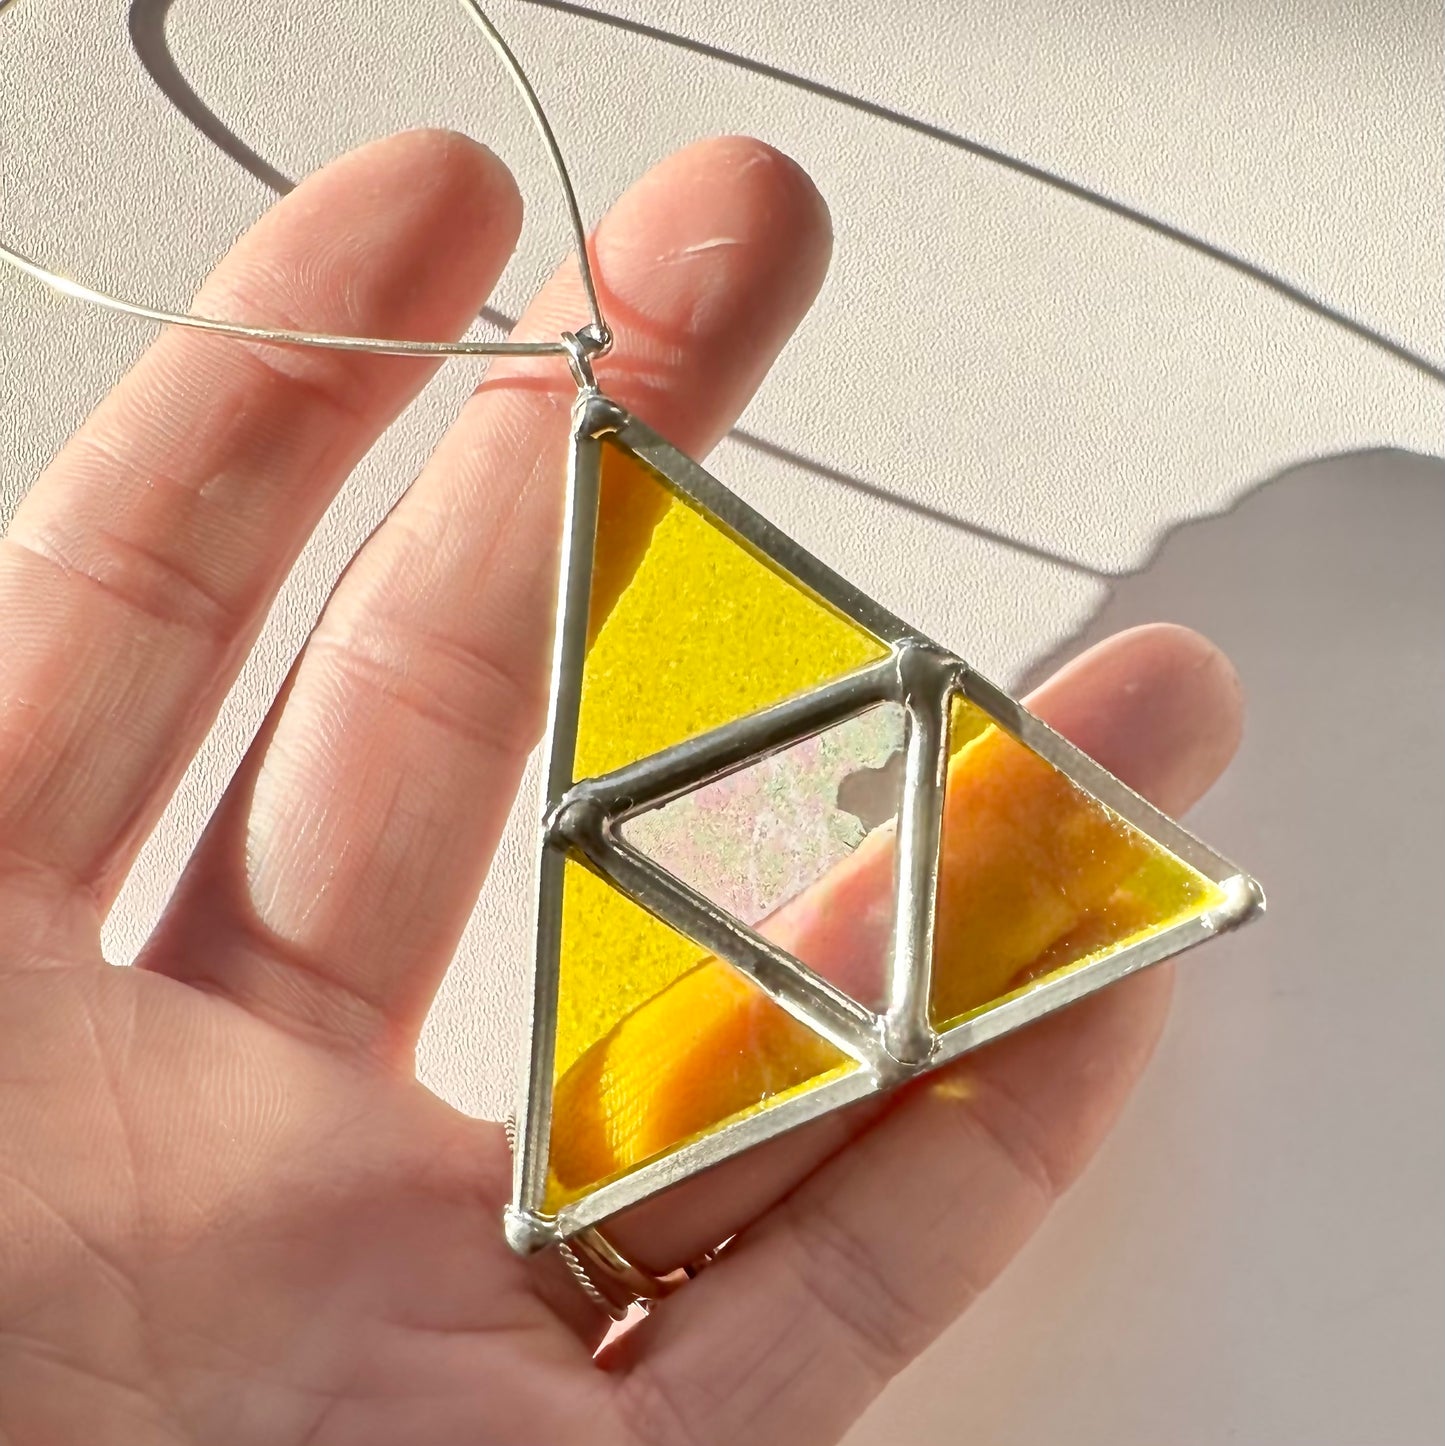 Zelda-inspired Triforce Ornament